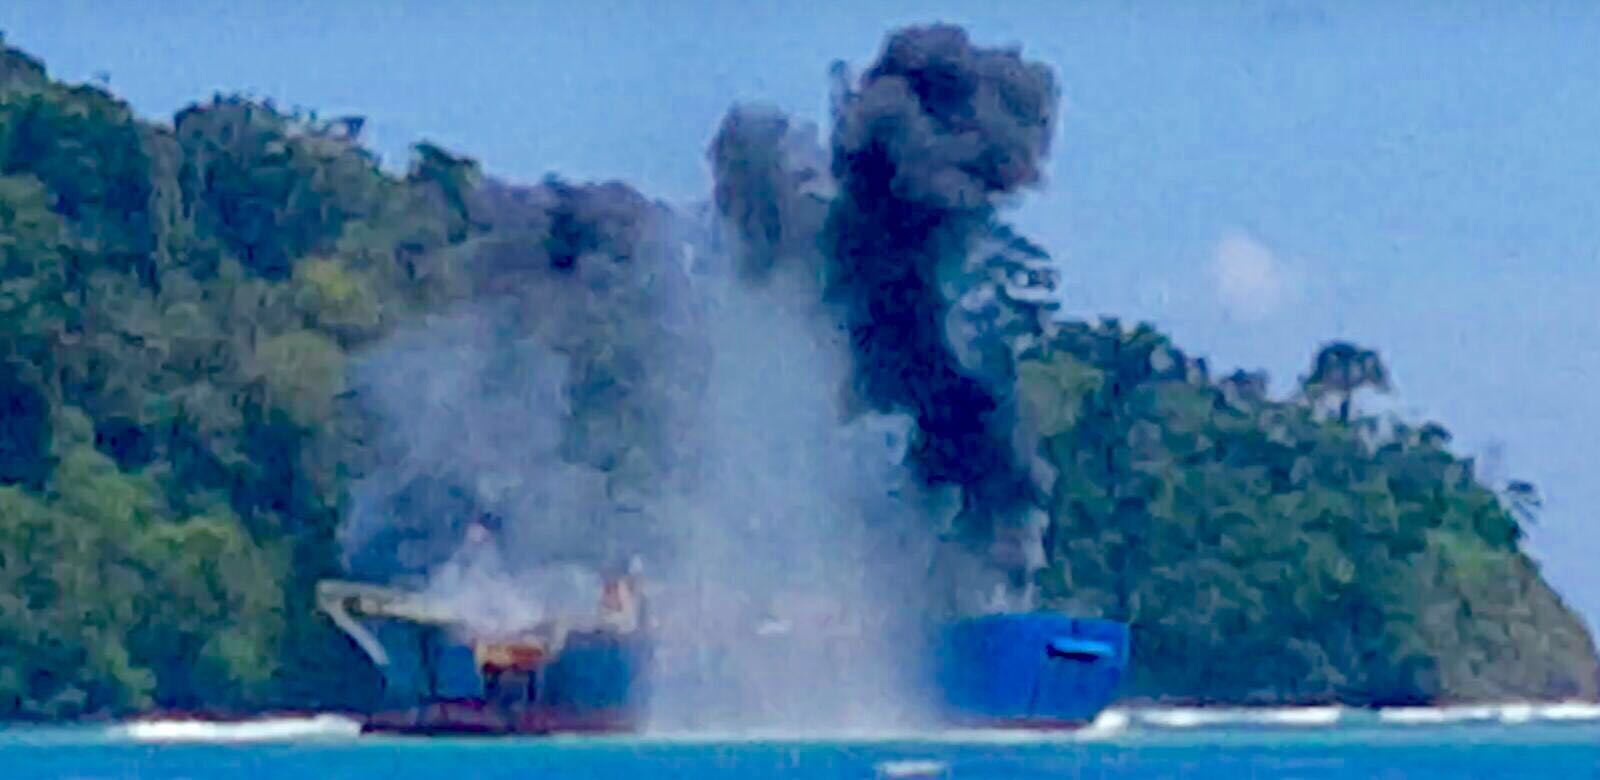 Kapal FV Viking yang terbukti melakukan illegal fishing dan telah dicari oleh Interpol, ditenggelamkan di di Pantai Timur Pangandaran, Kabupaten Pangandaran, Jawa Barat pada Senin (14/03/2016). Foto : Humas KKP 